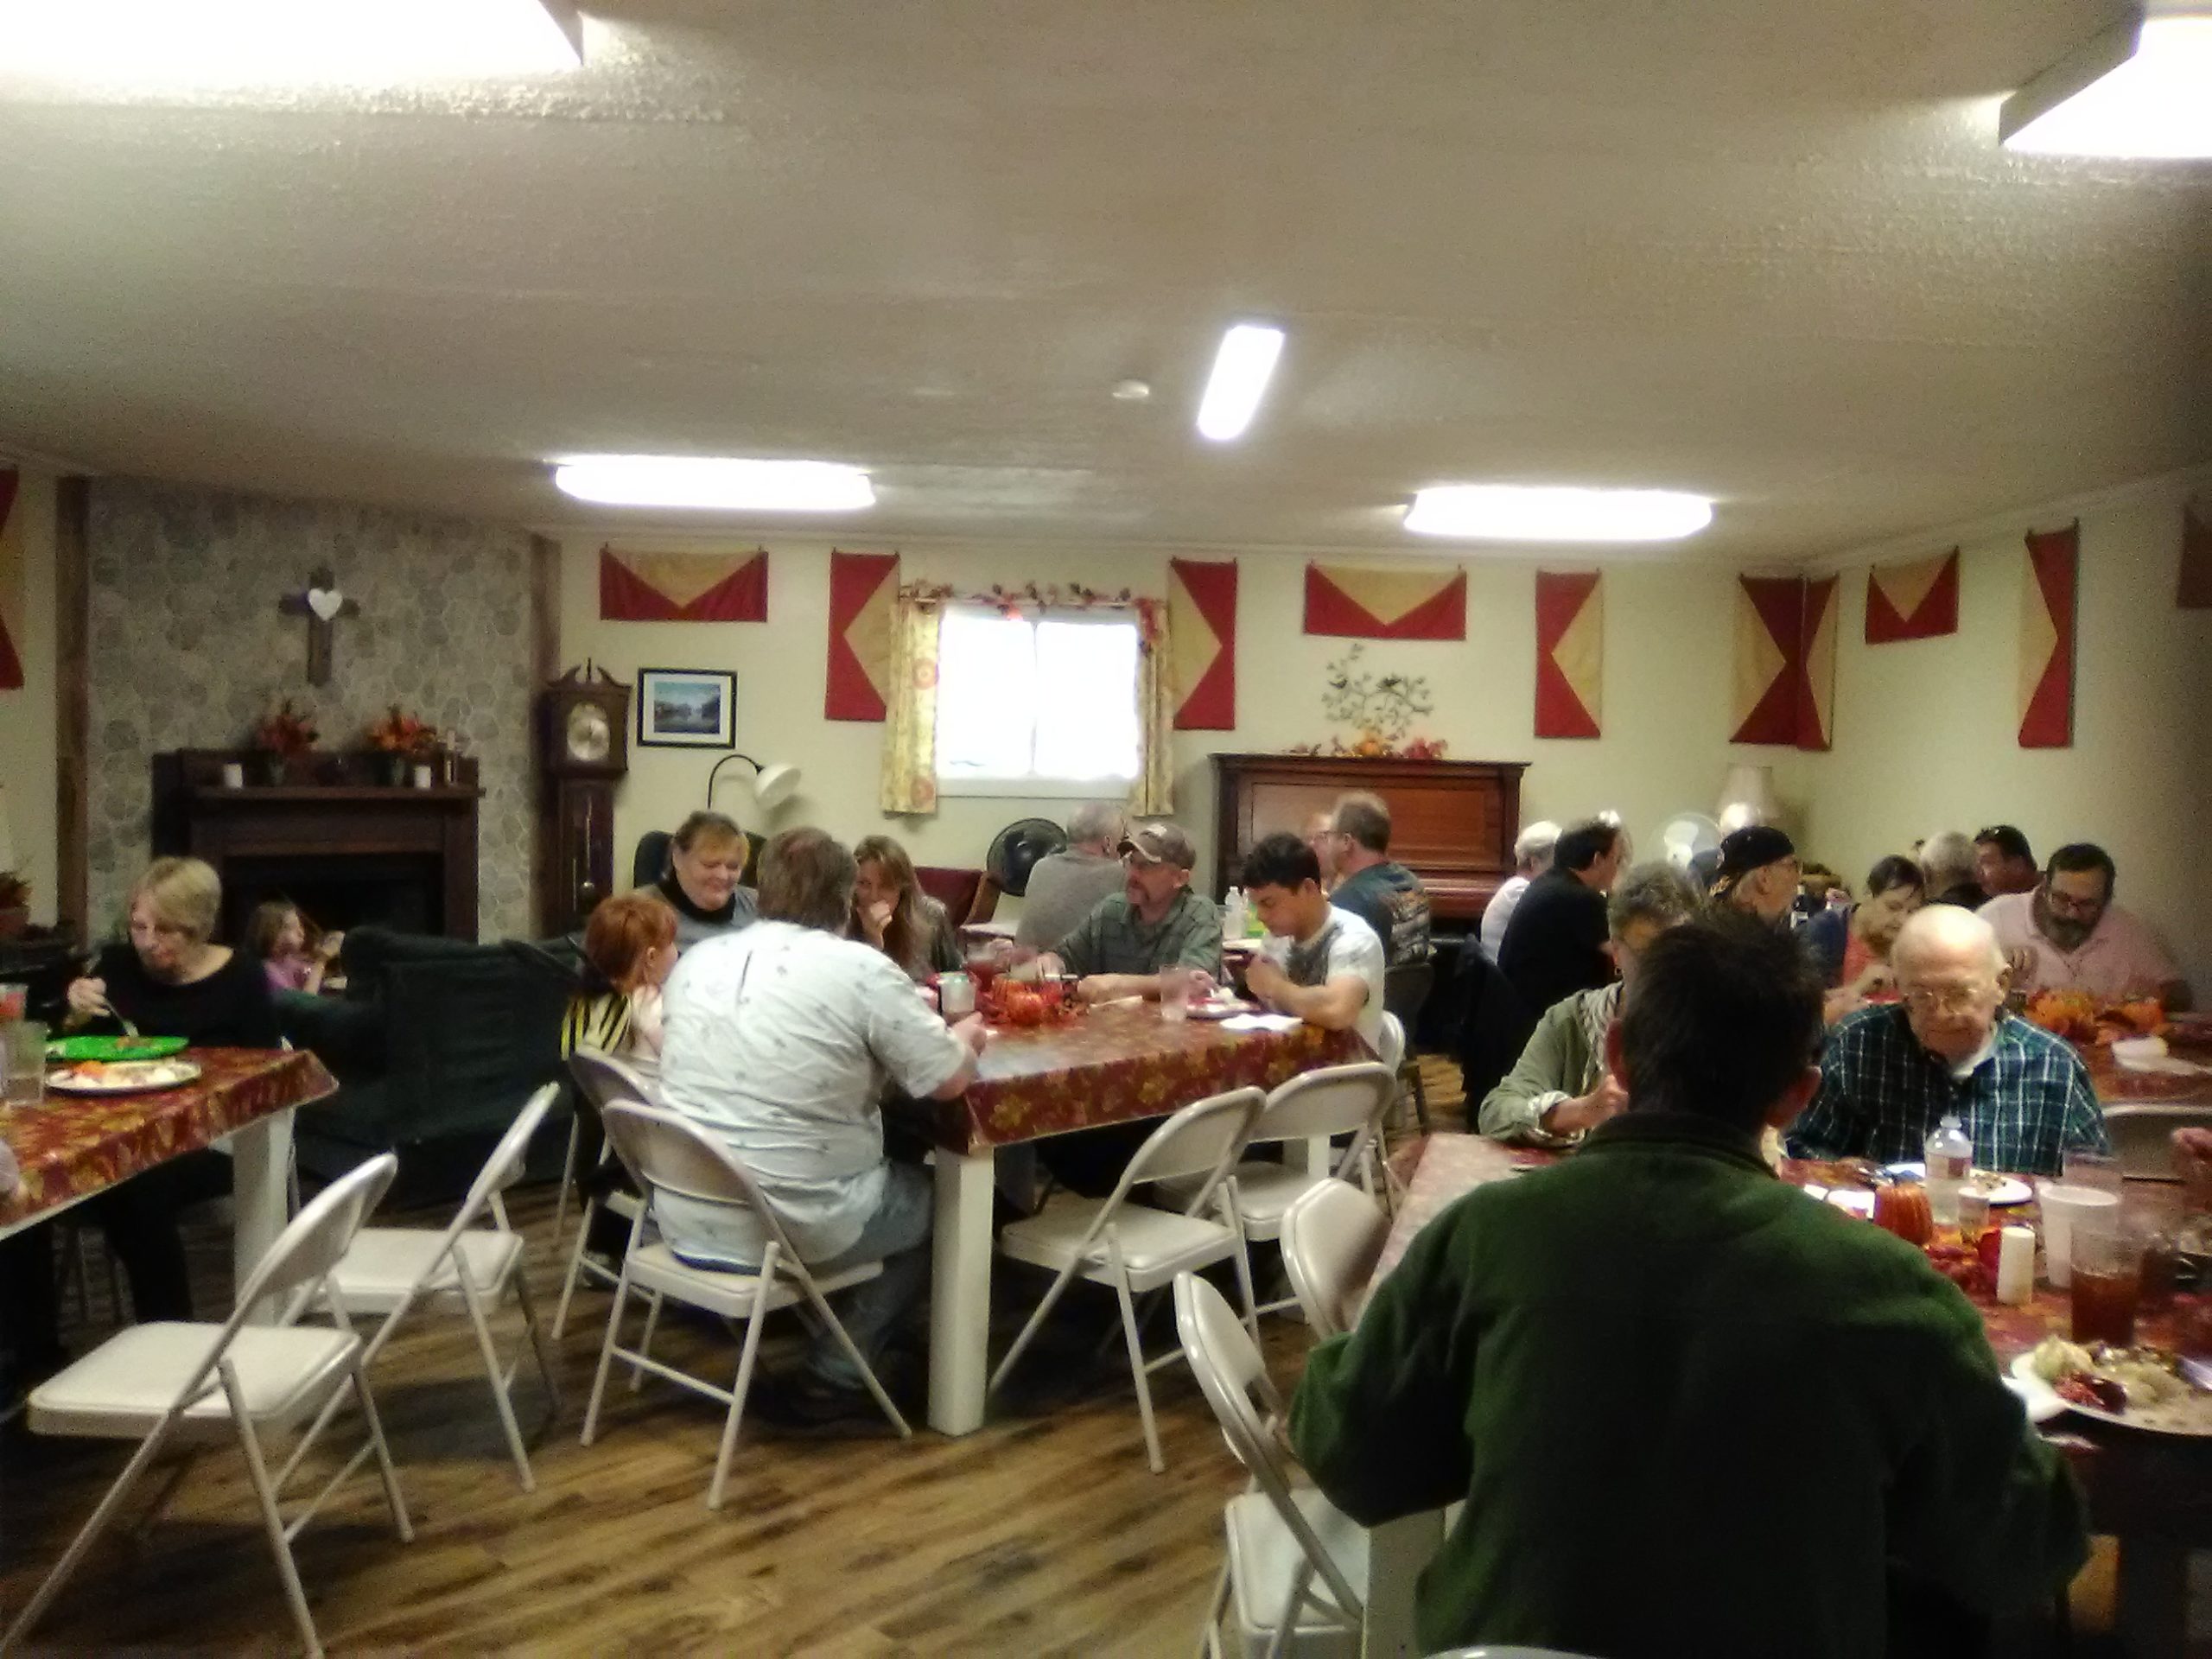 People inside large room eating dinner at Beaver Run RV Park